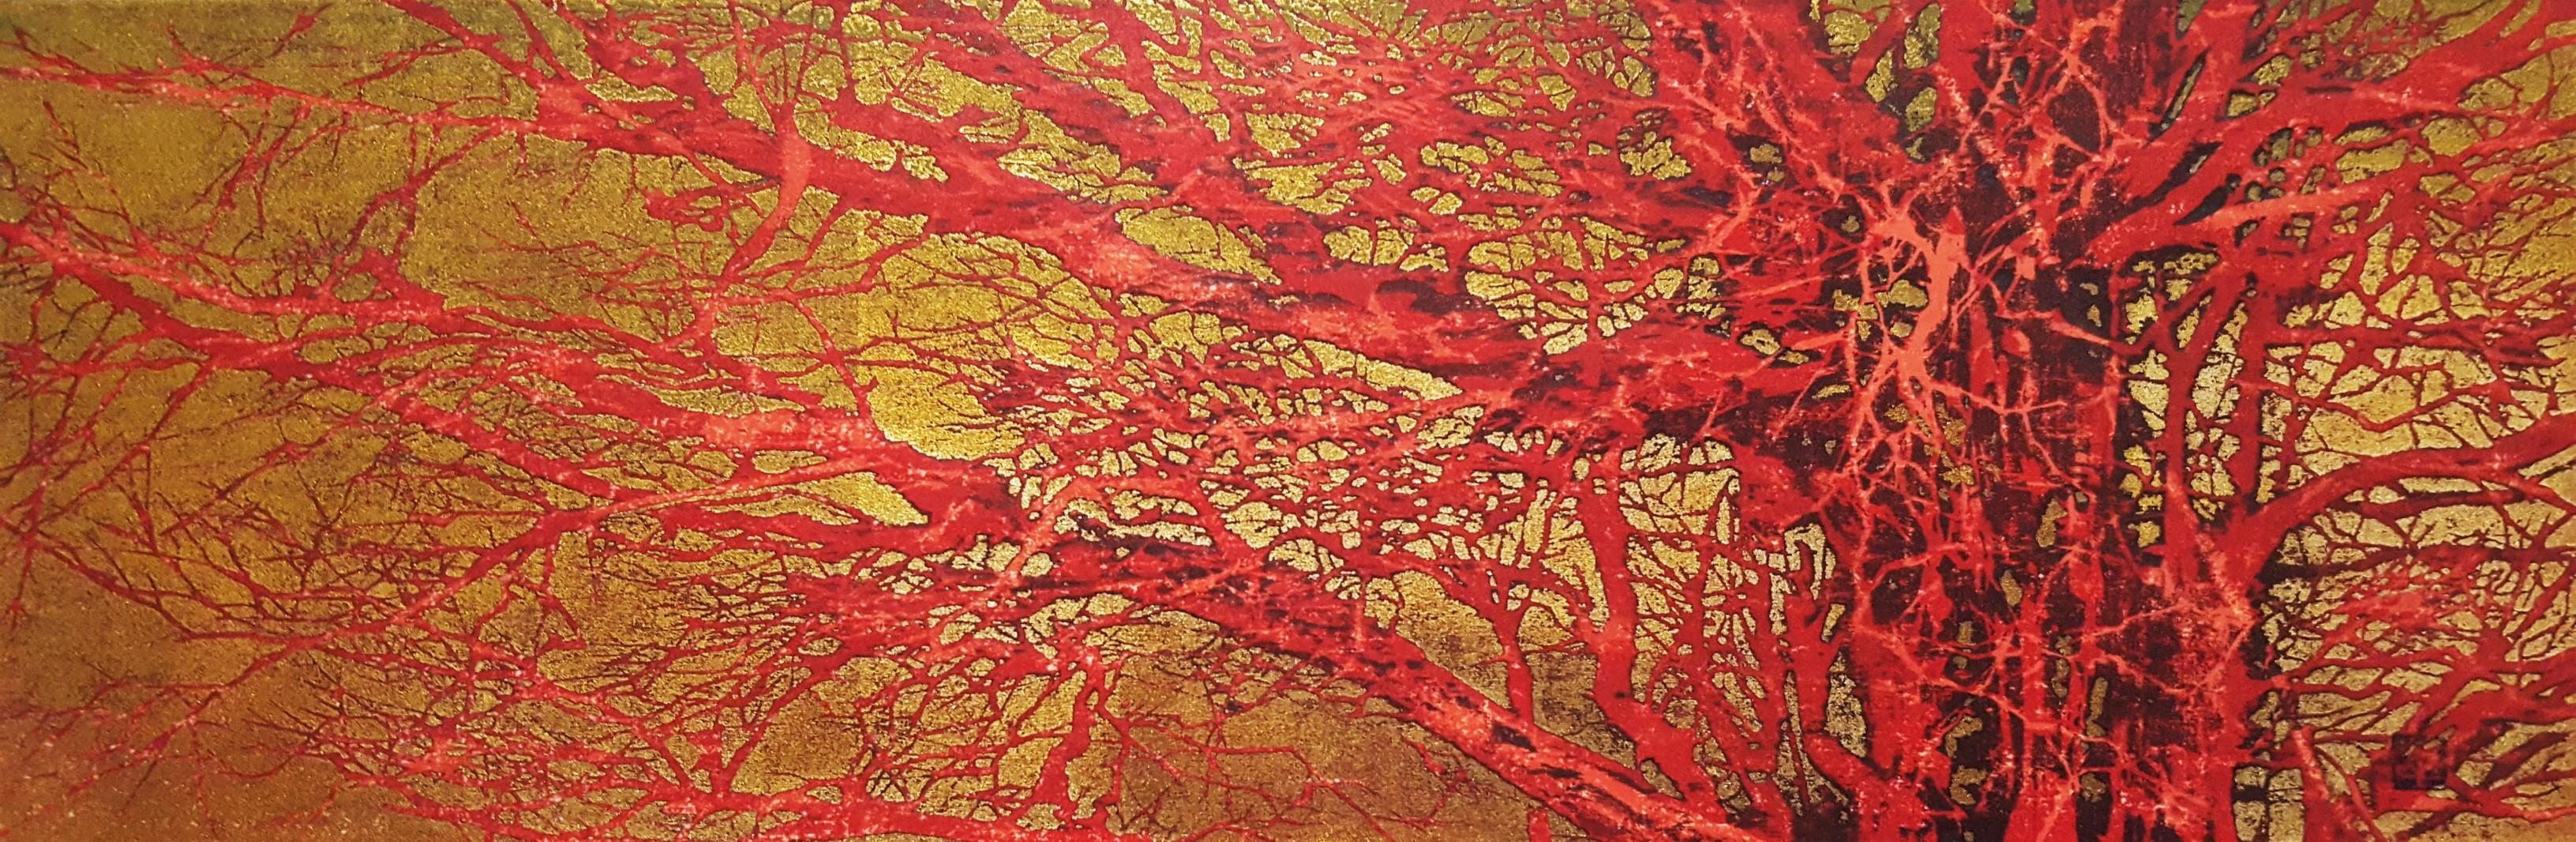 Joichi Hoshi Landscape Print - Red Branches (Akai eda)